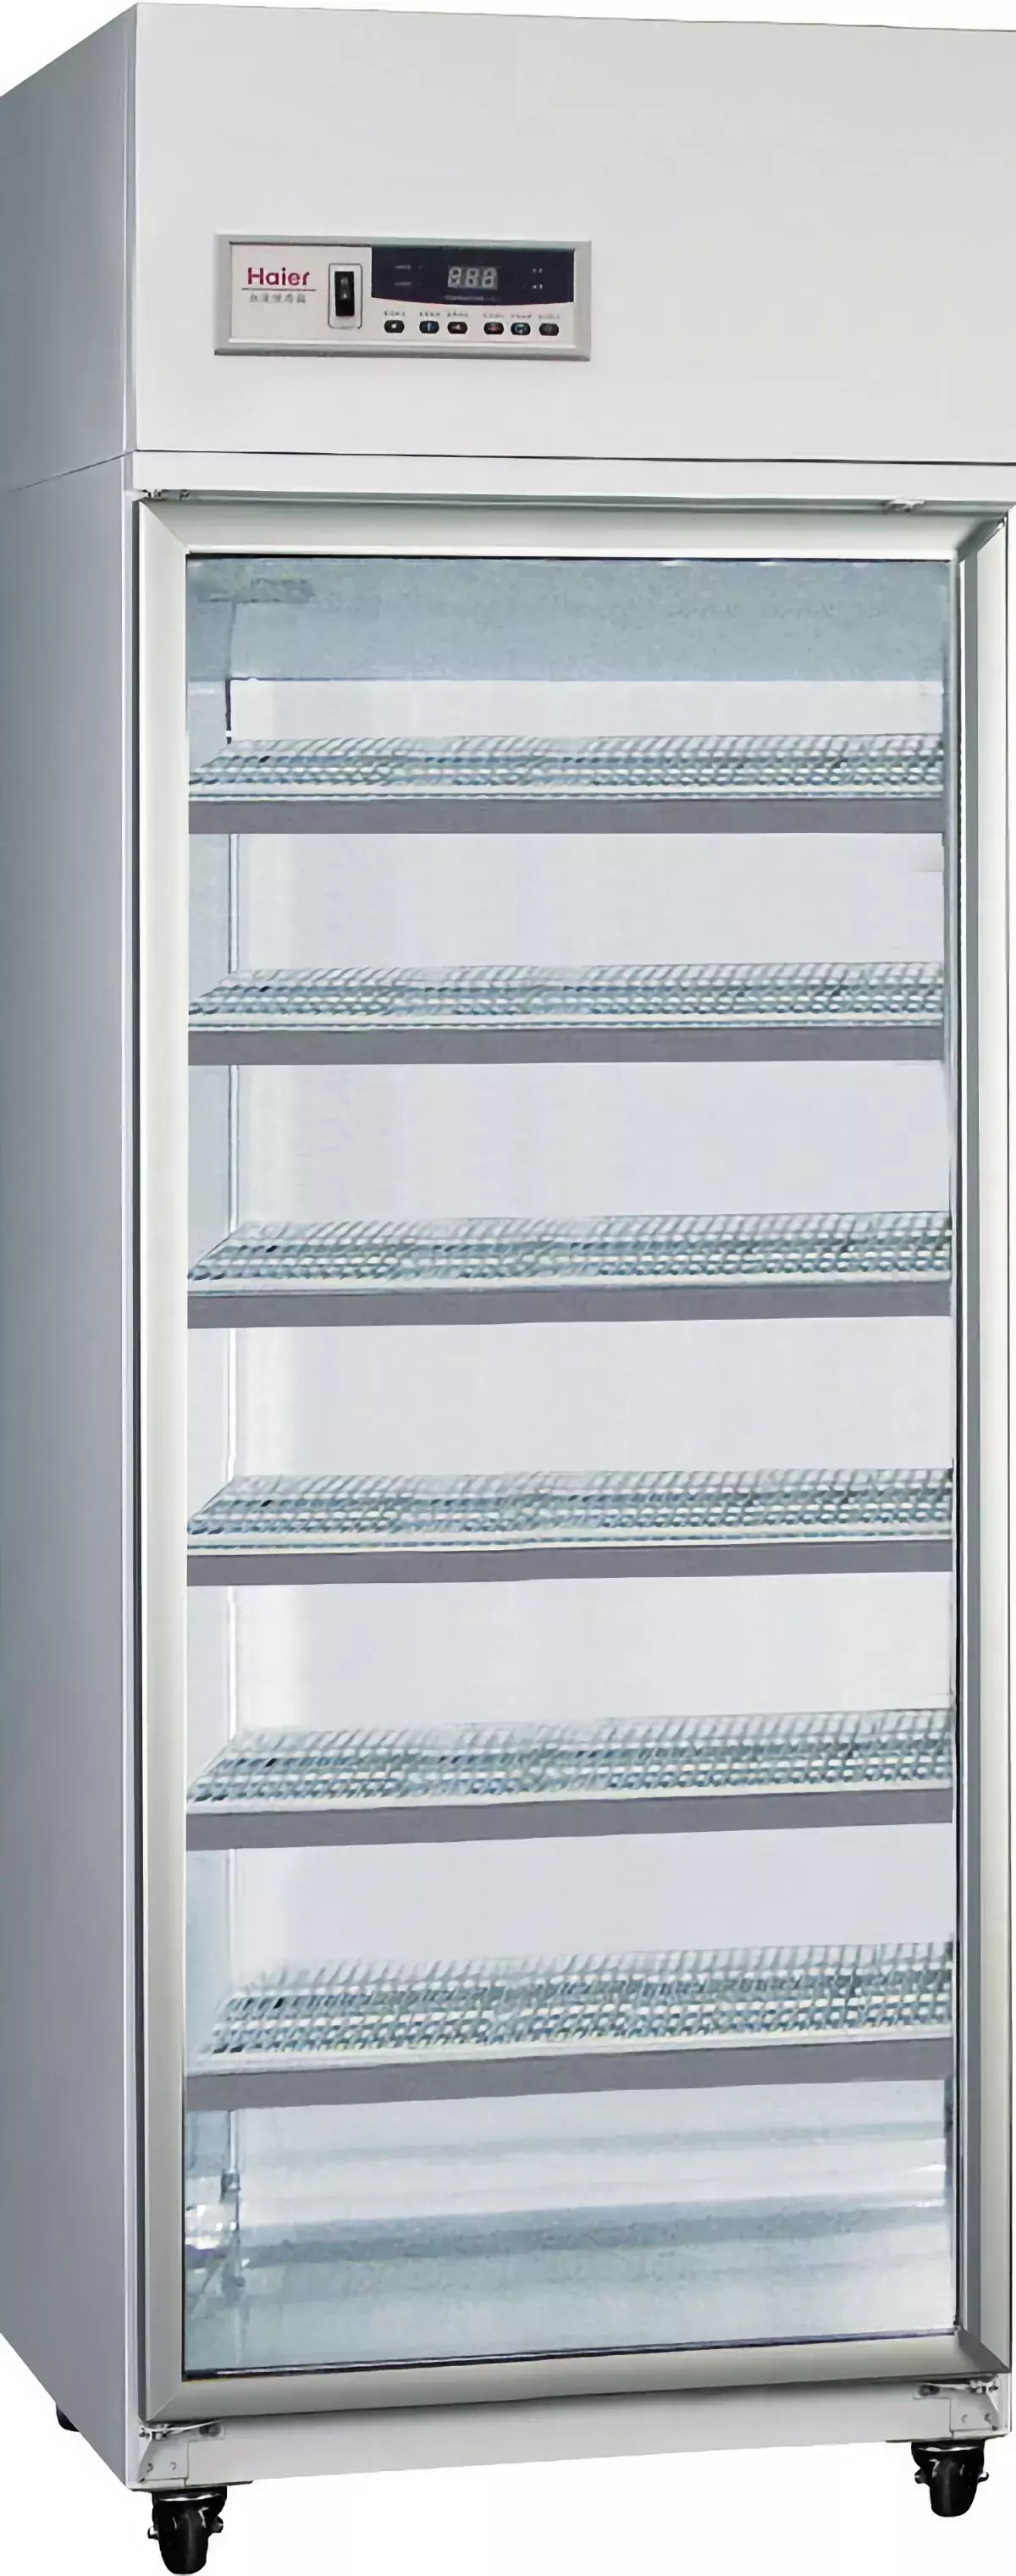 Фармацевтический холодильник HYC-610